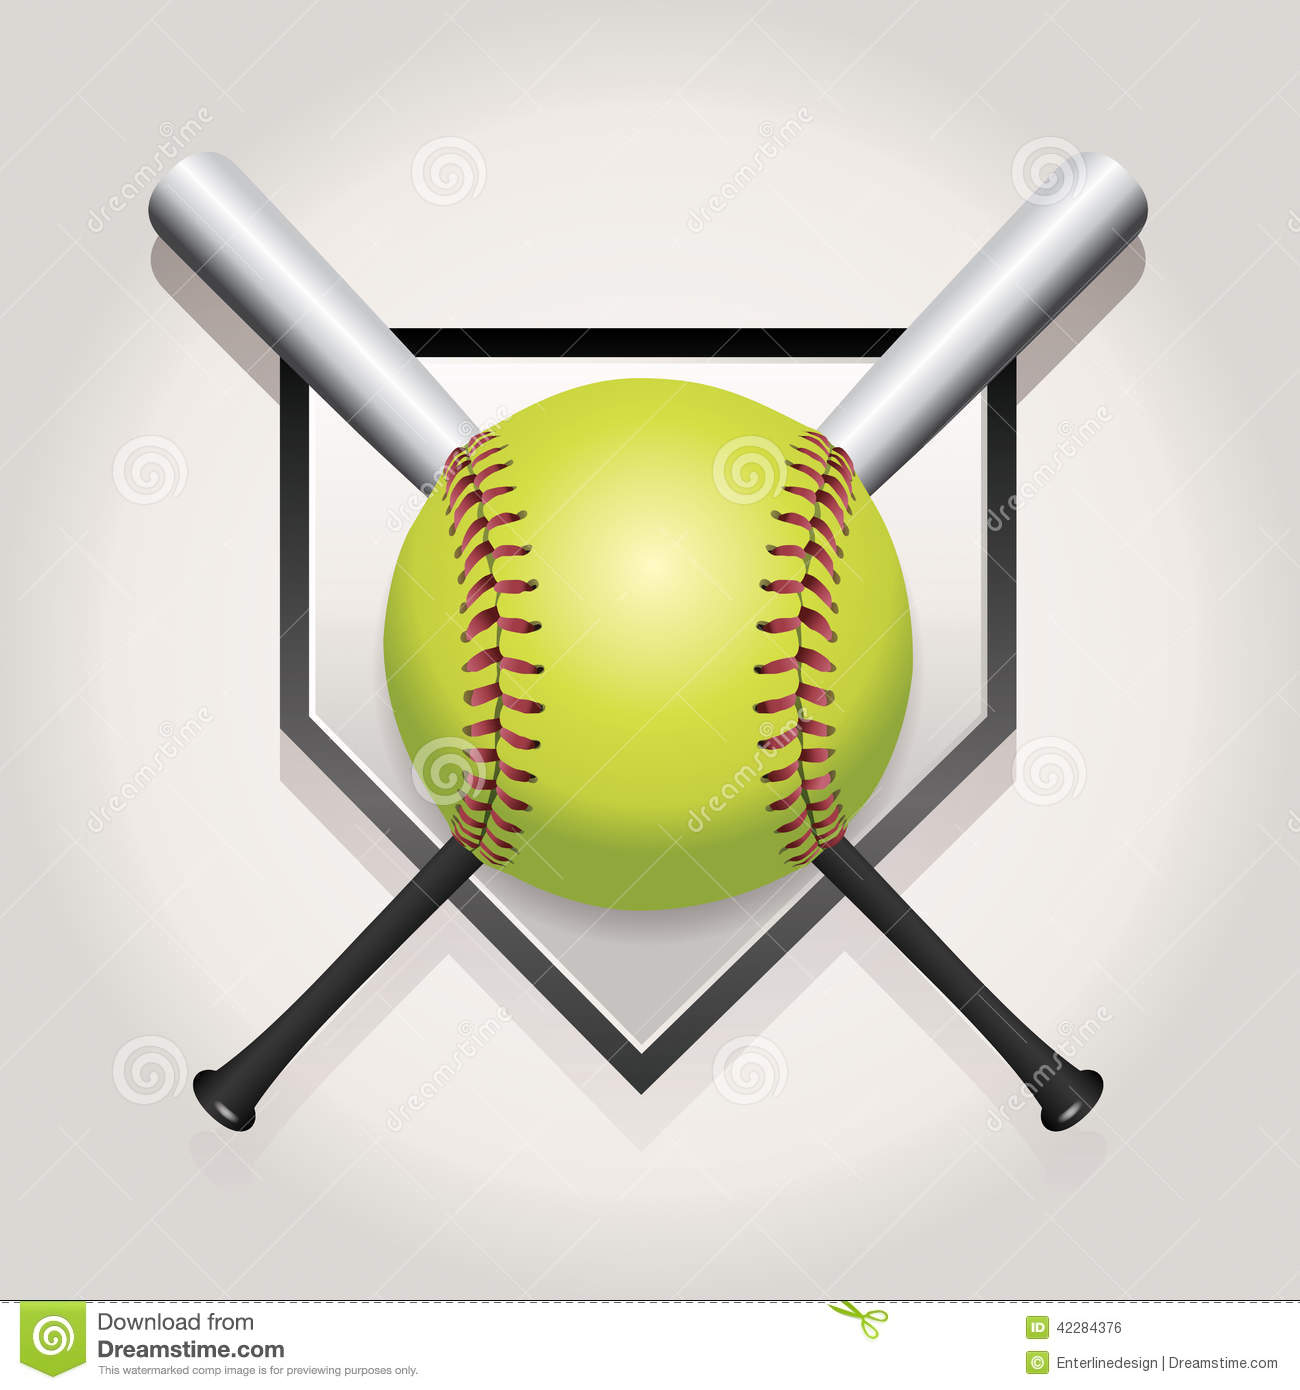 Softball Bat And Homeplate Emblem Illustration Stock Vector   Image